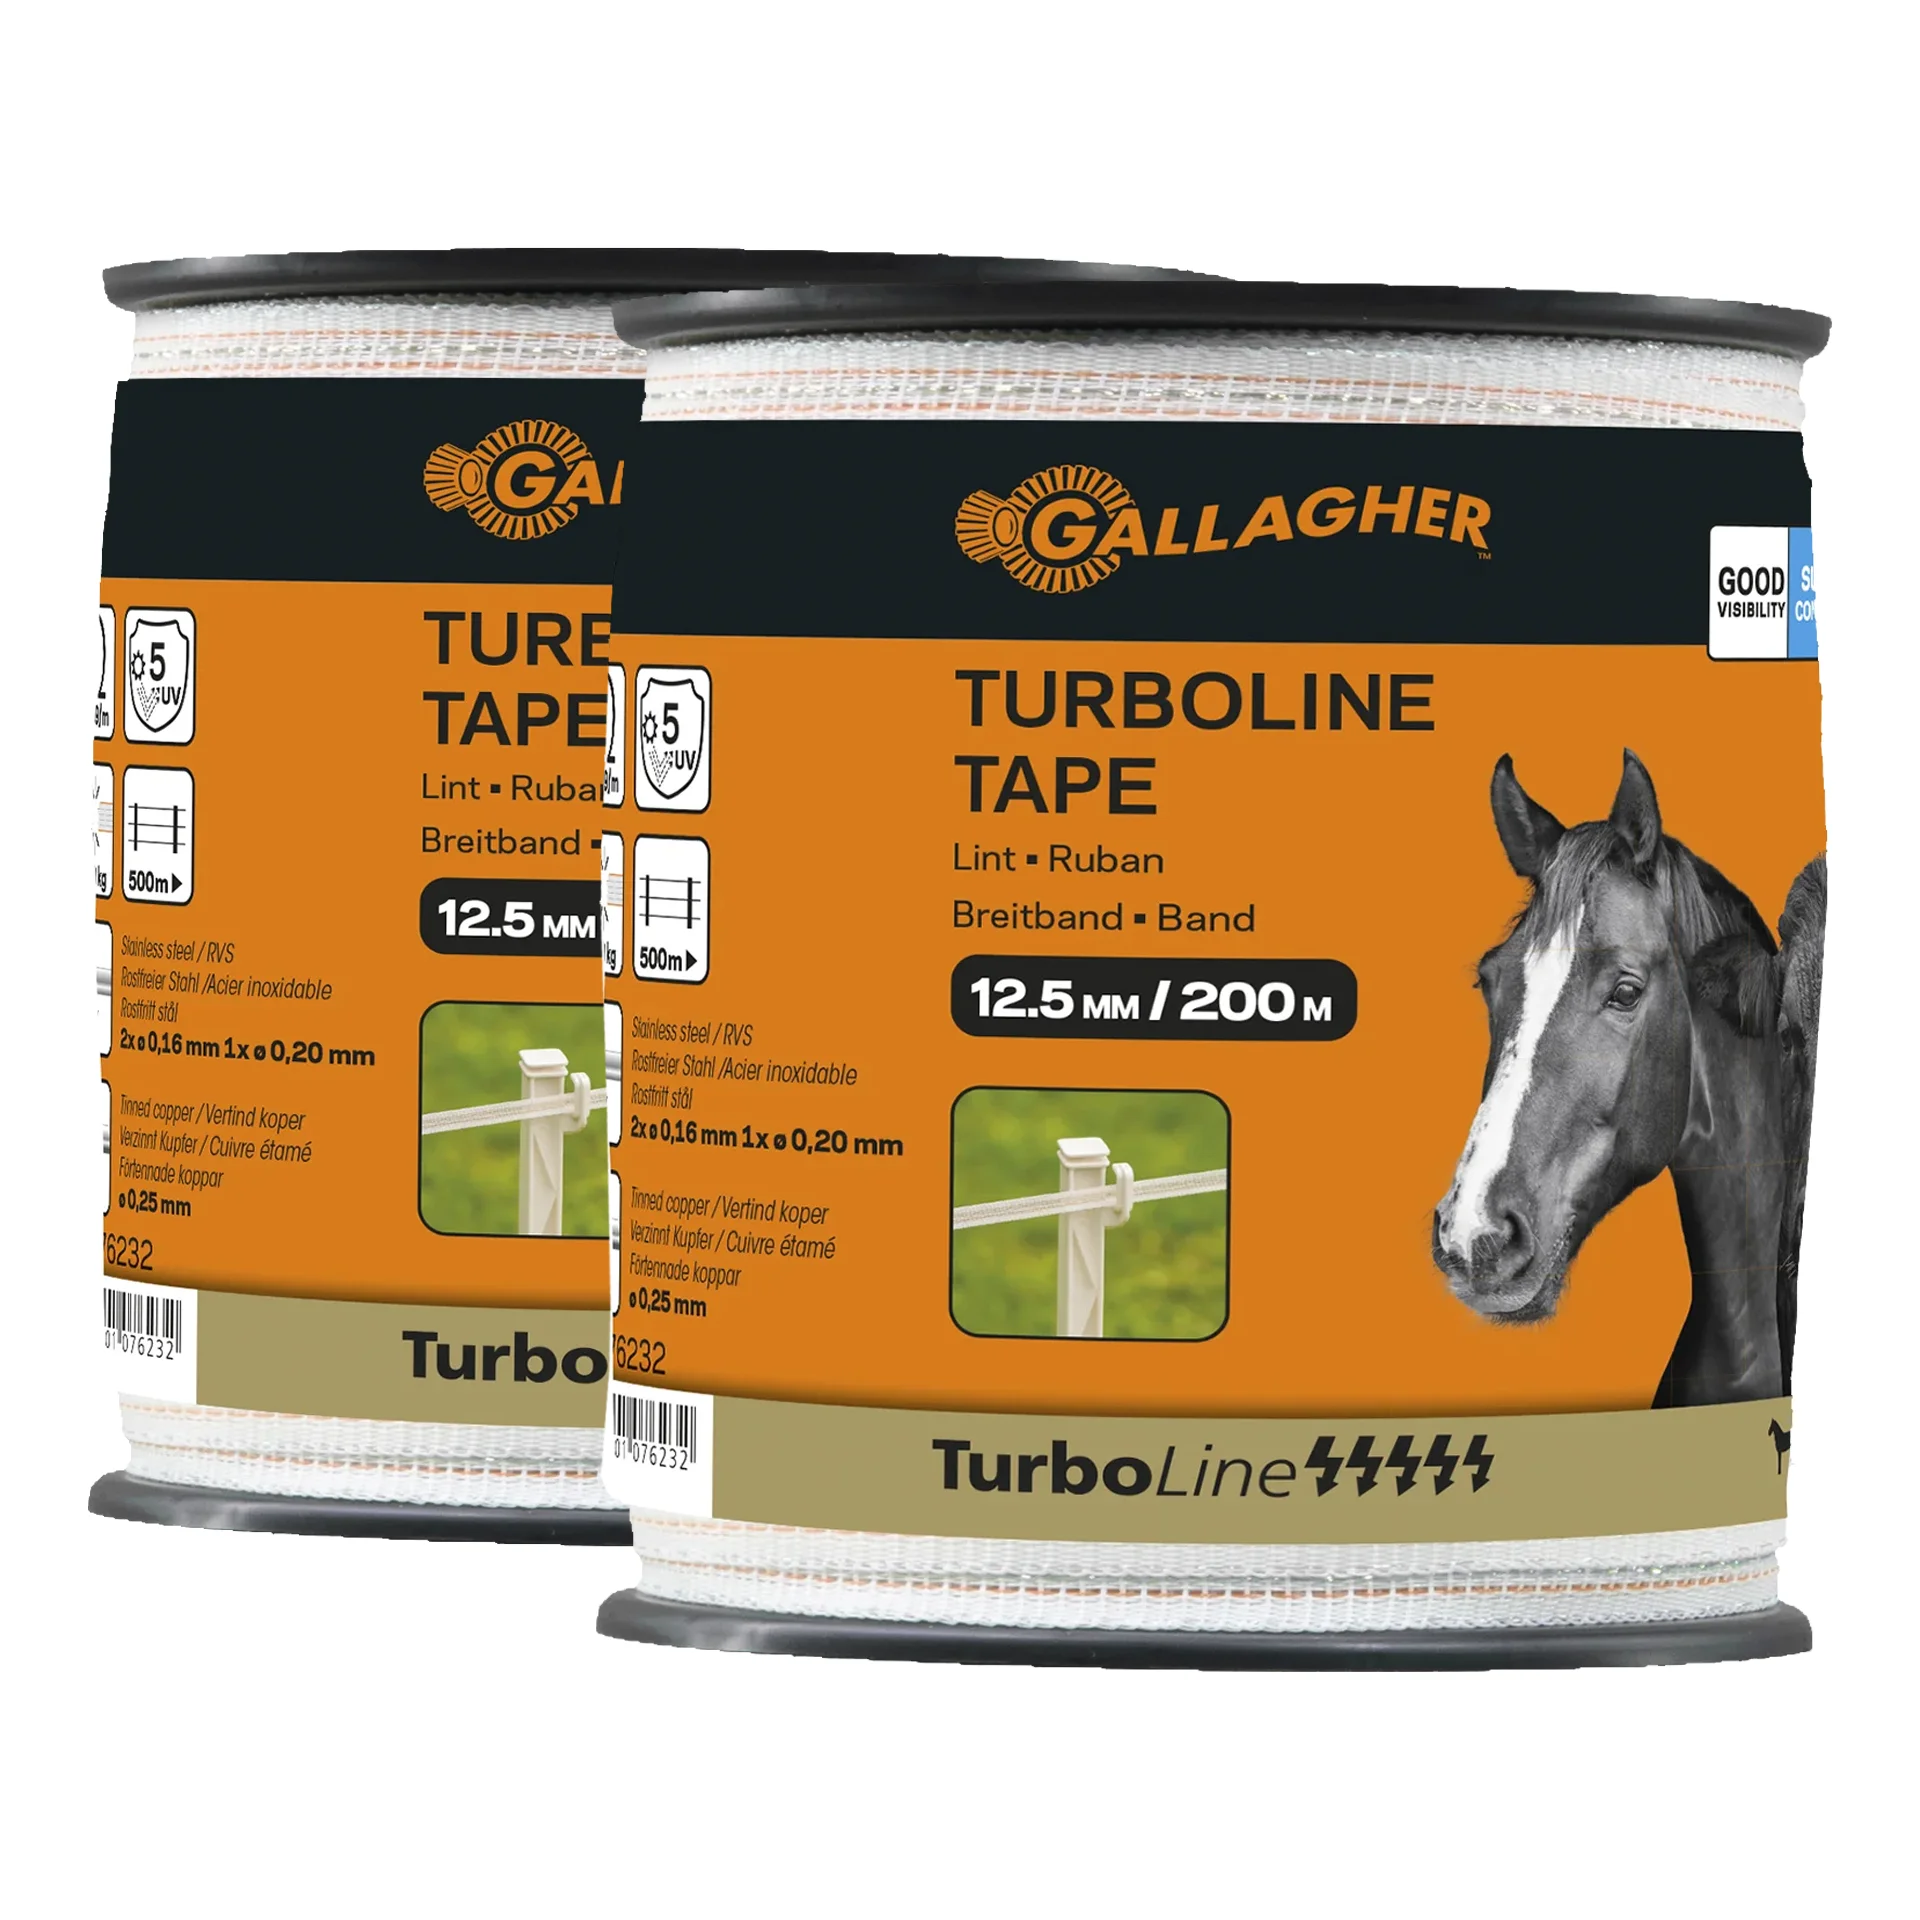 Duopack TurboLine tape 12,5mm white 2x200m